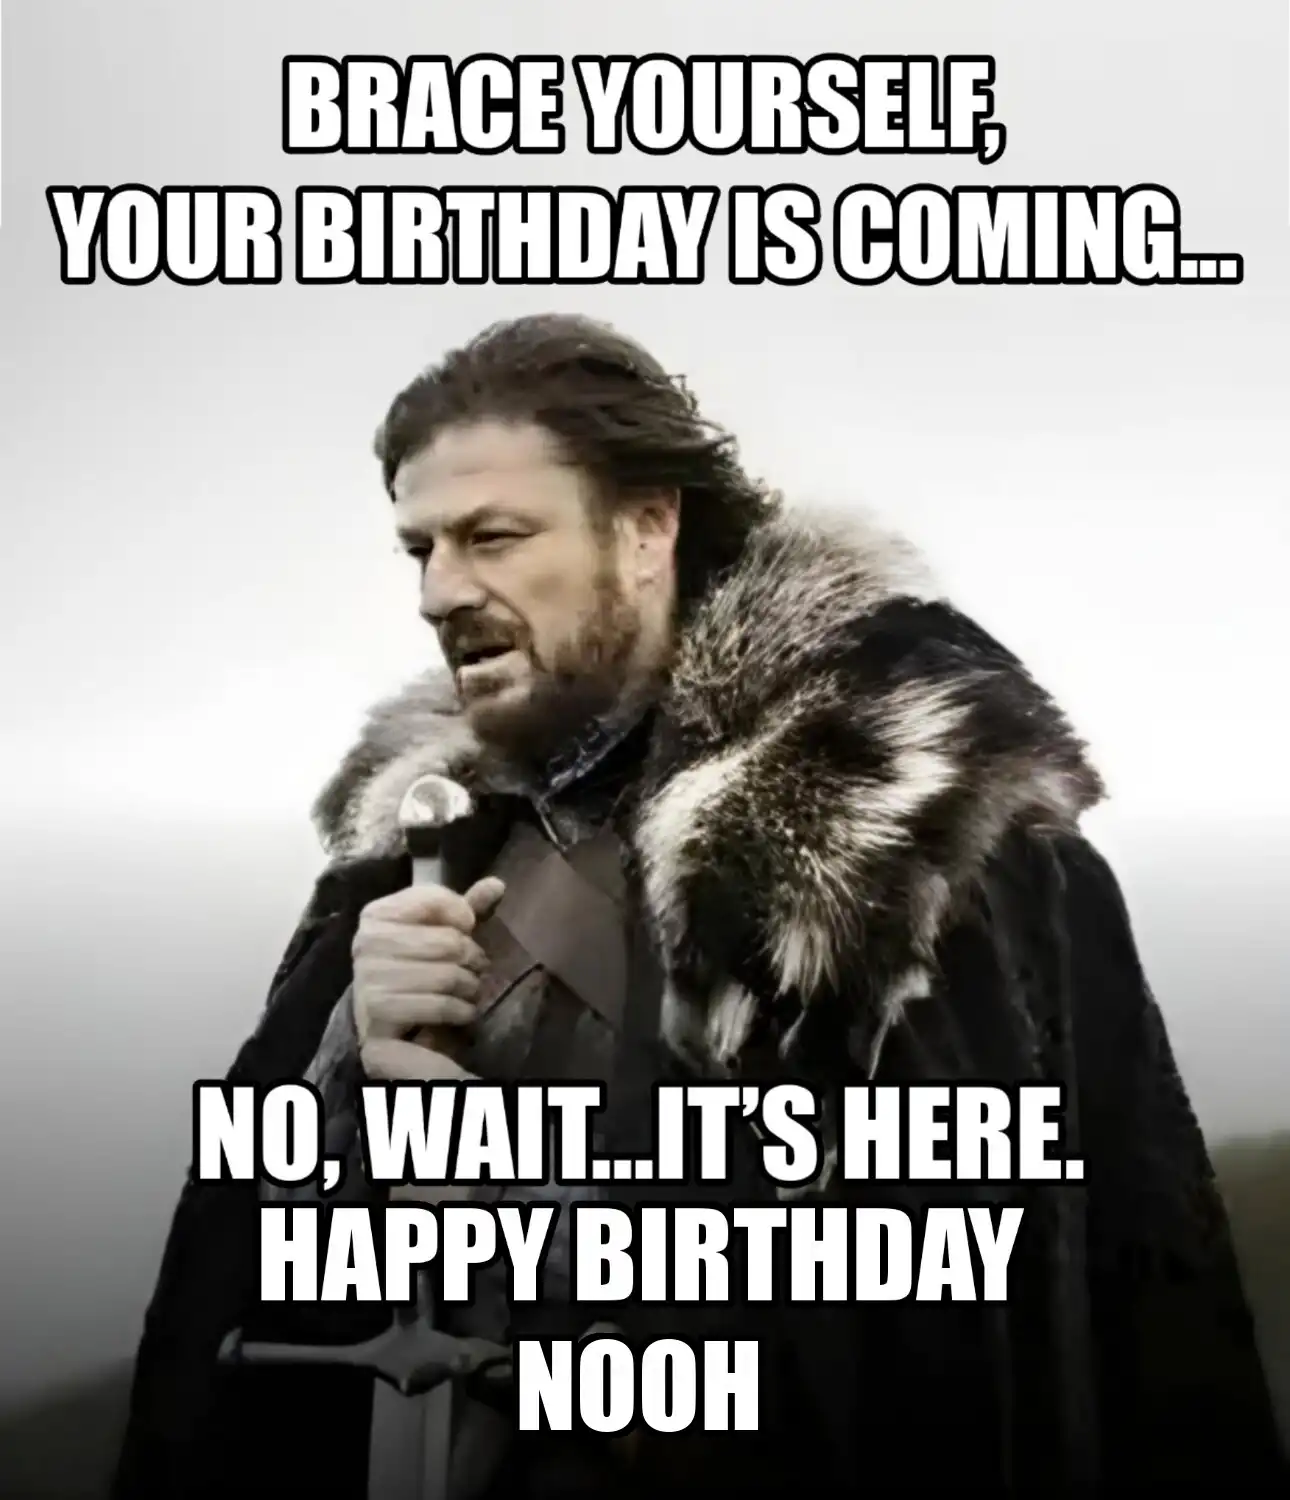 Happy Birthday Nooh Brace Yourself Your Birthday Is Coming Meme